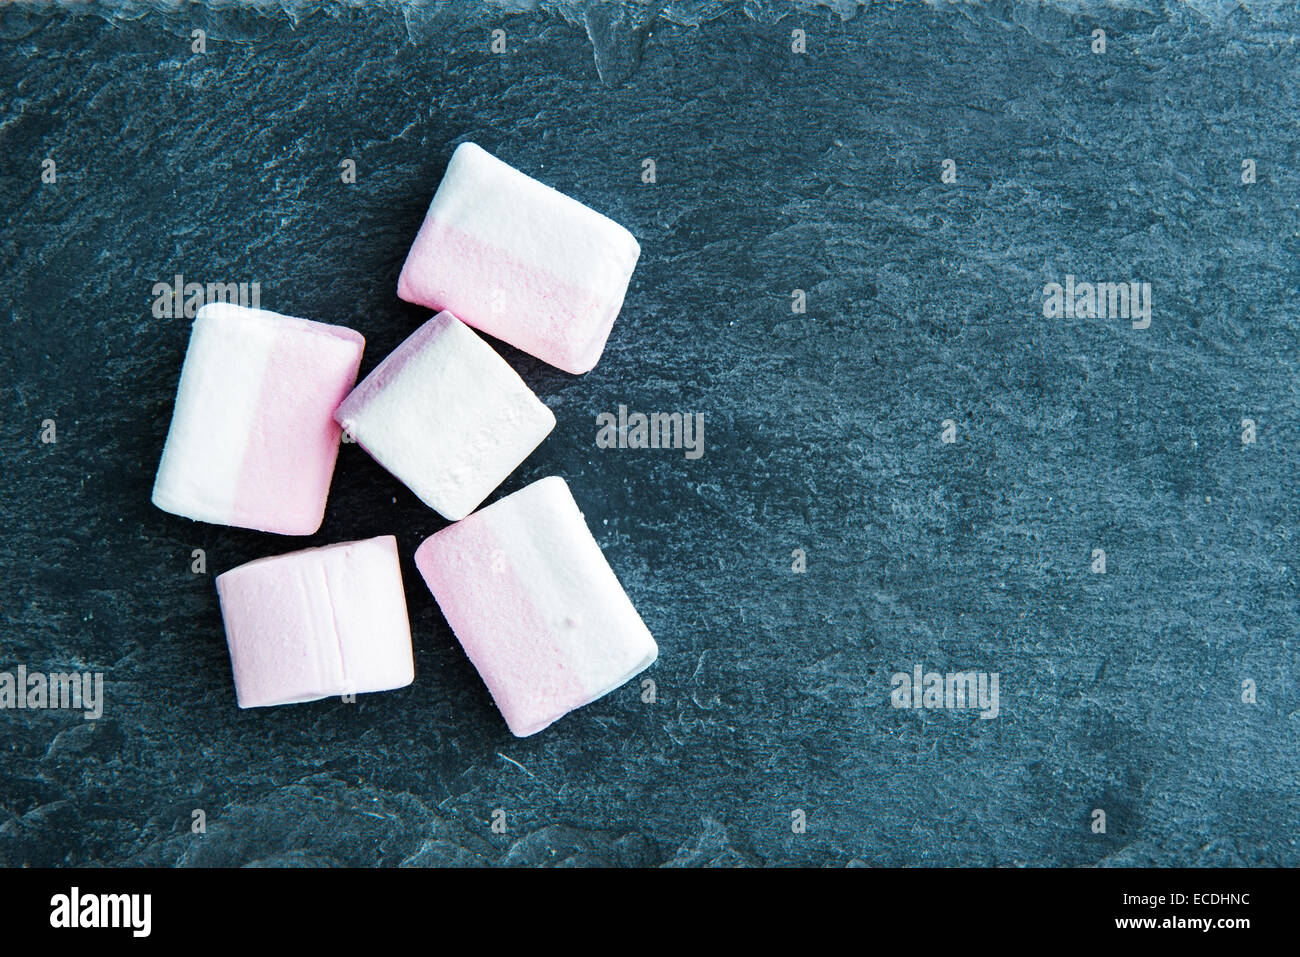 Closeup on marshmallow on stone substrate Stock Photo